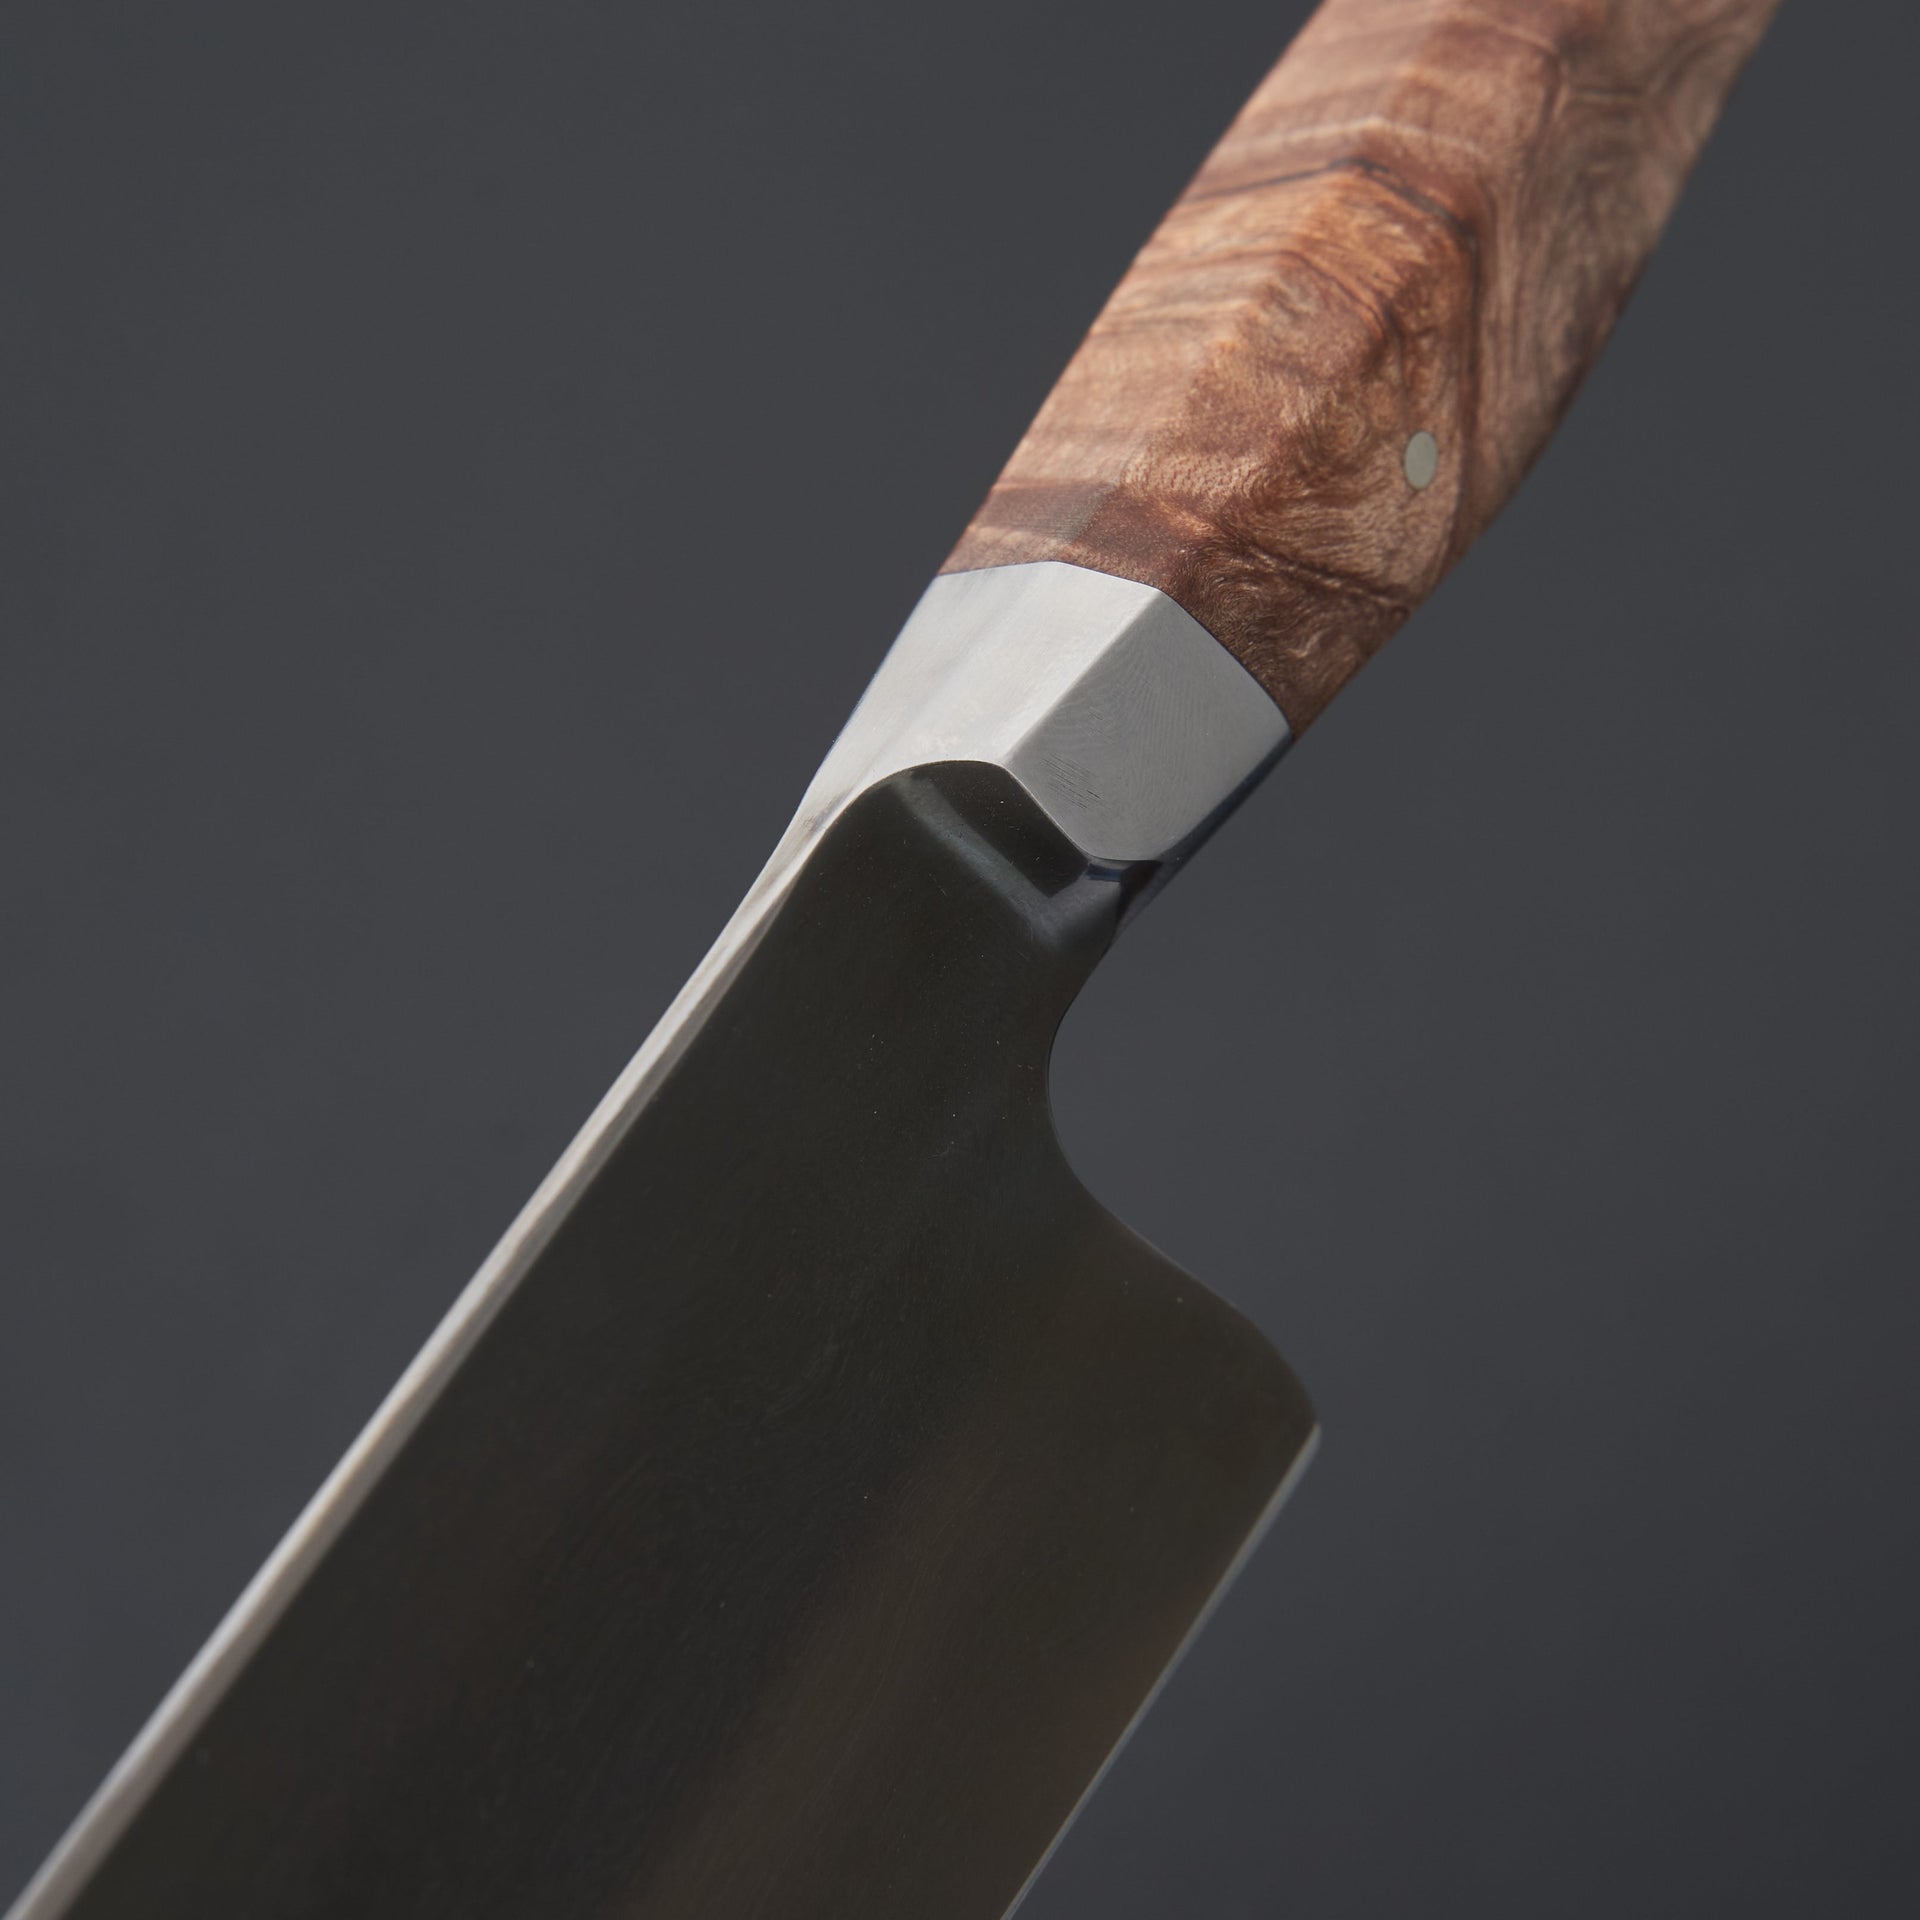 8 Sheath - STEELPORT Knife Co.